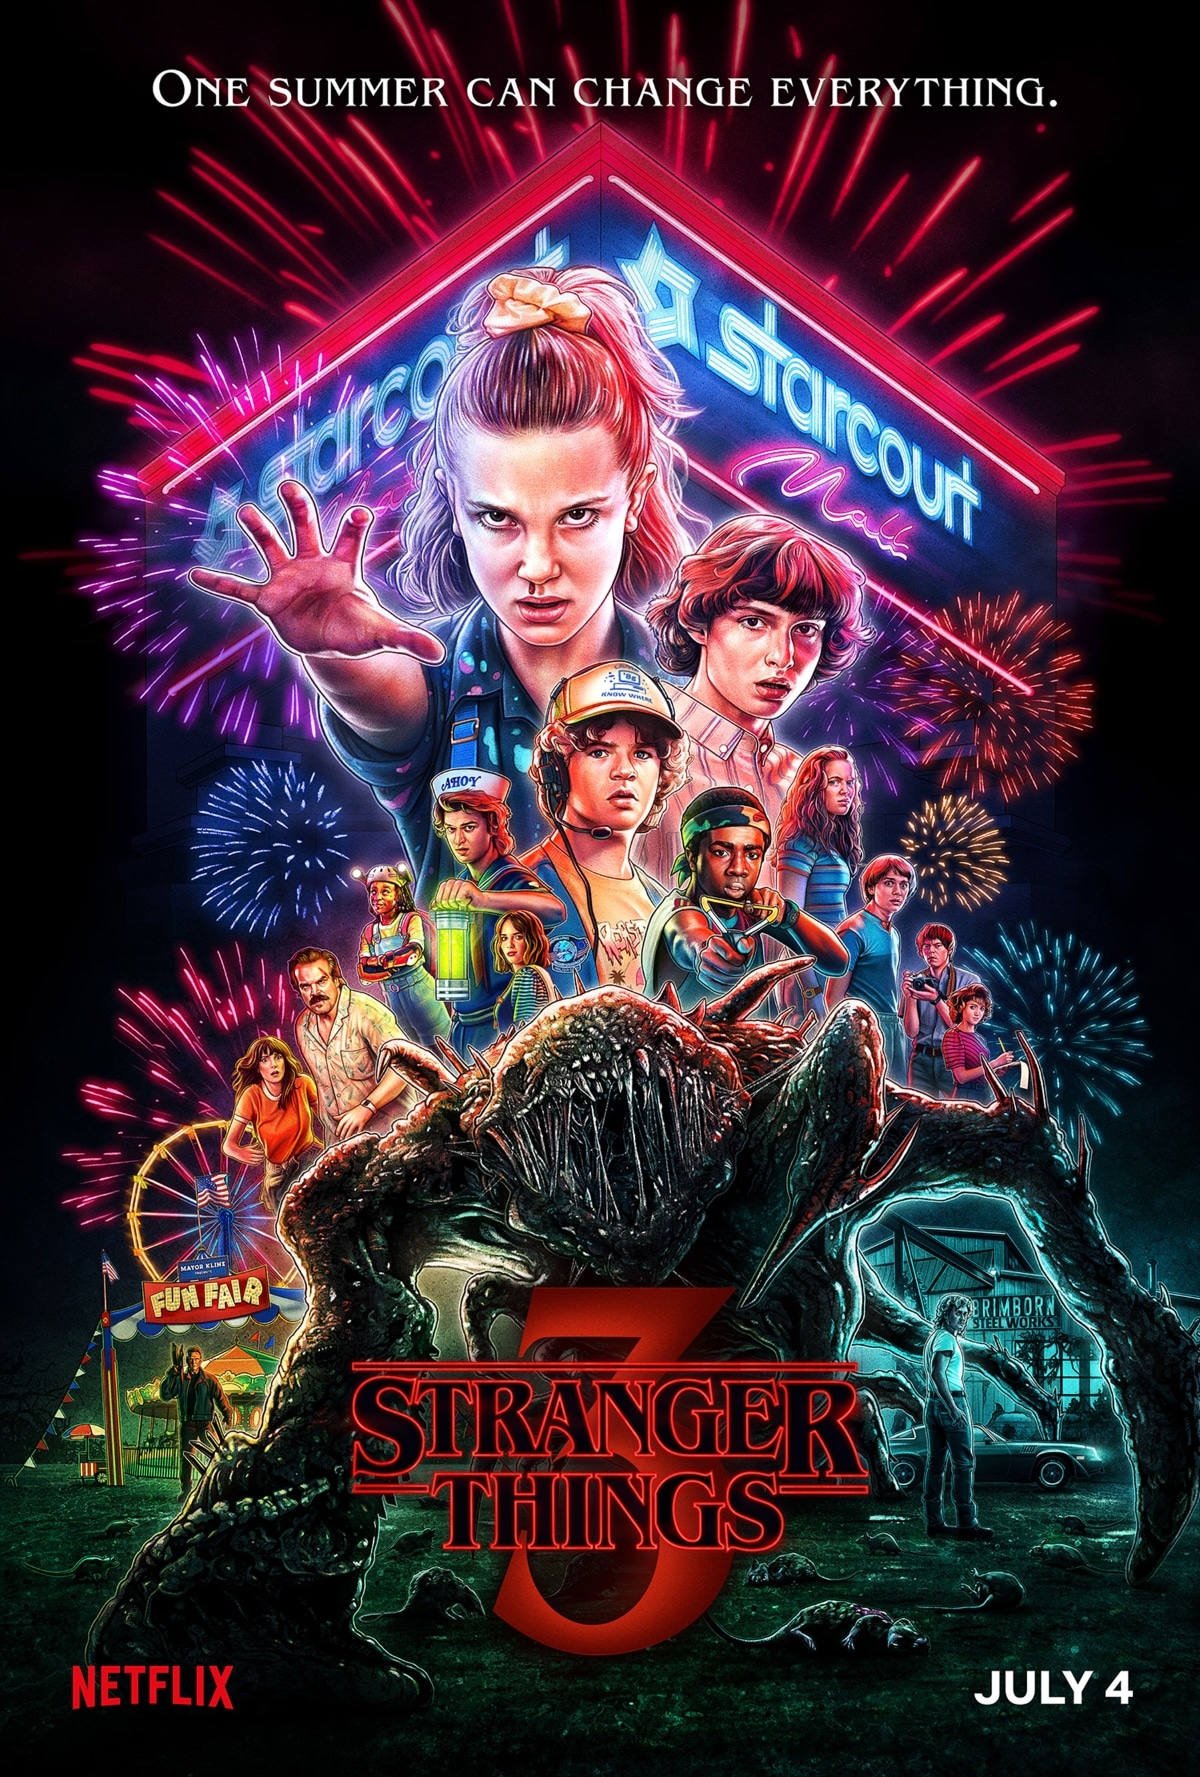 Season 3 poster for Stranger Things showing various cast members